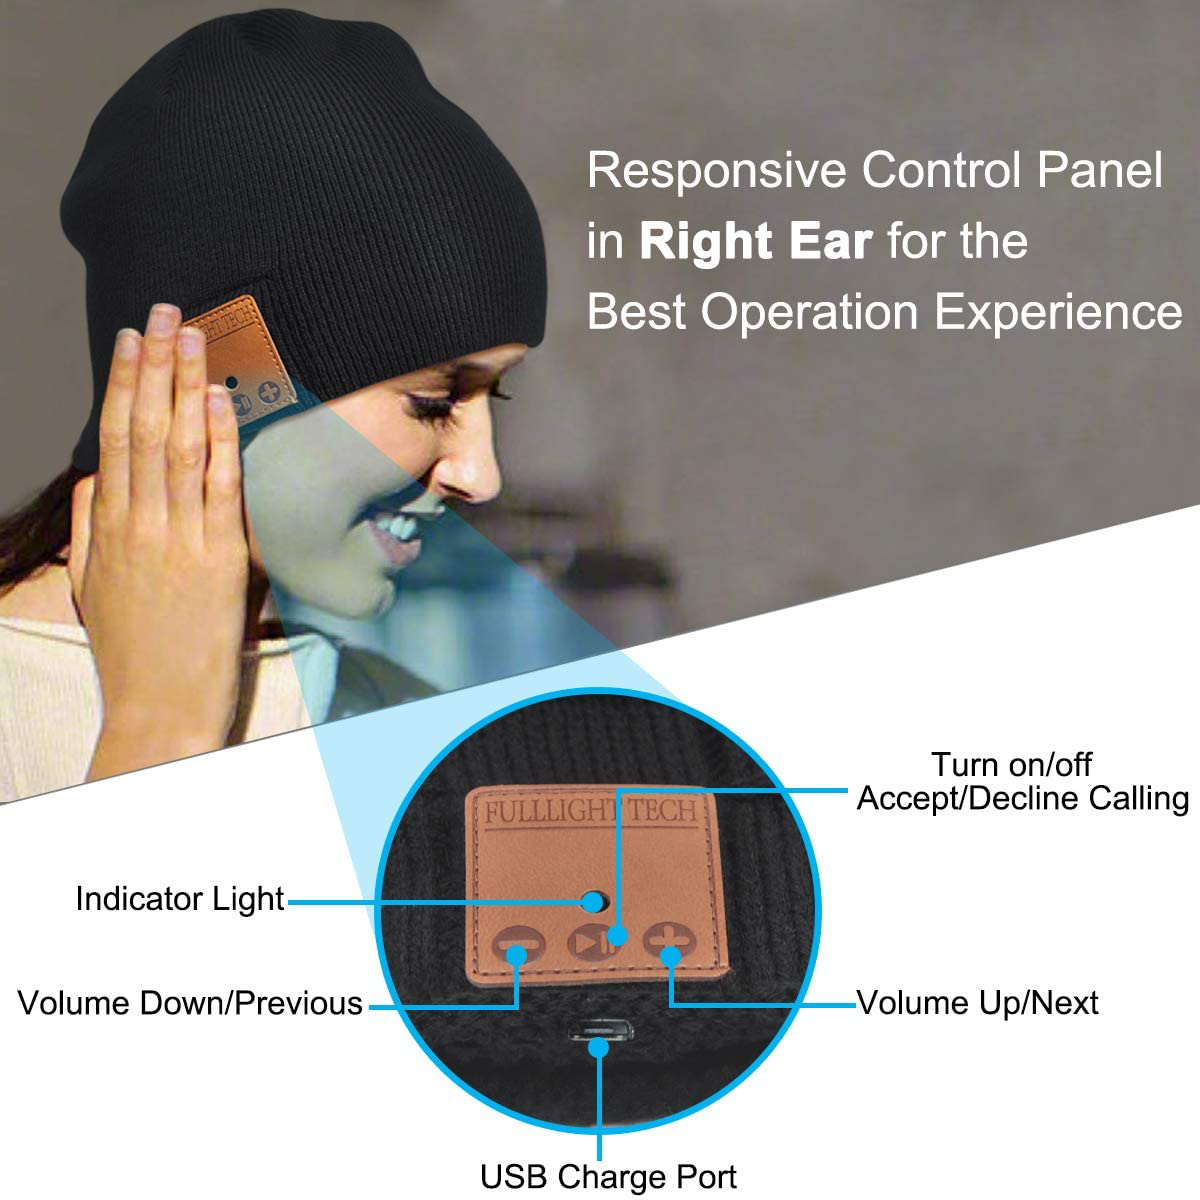 Bluetooth Beanie Hat Headphones Unique Christmas Tech Gifts